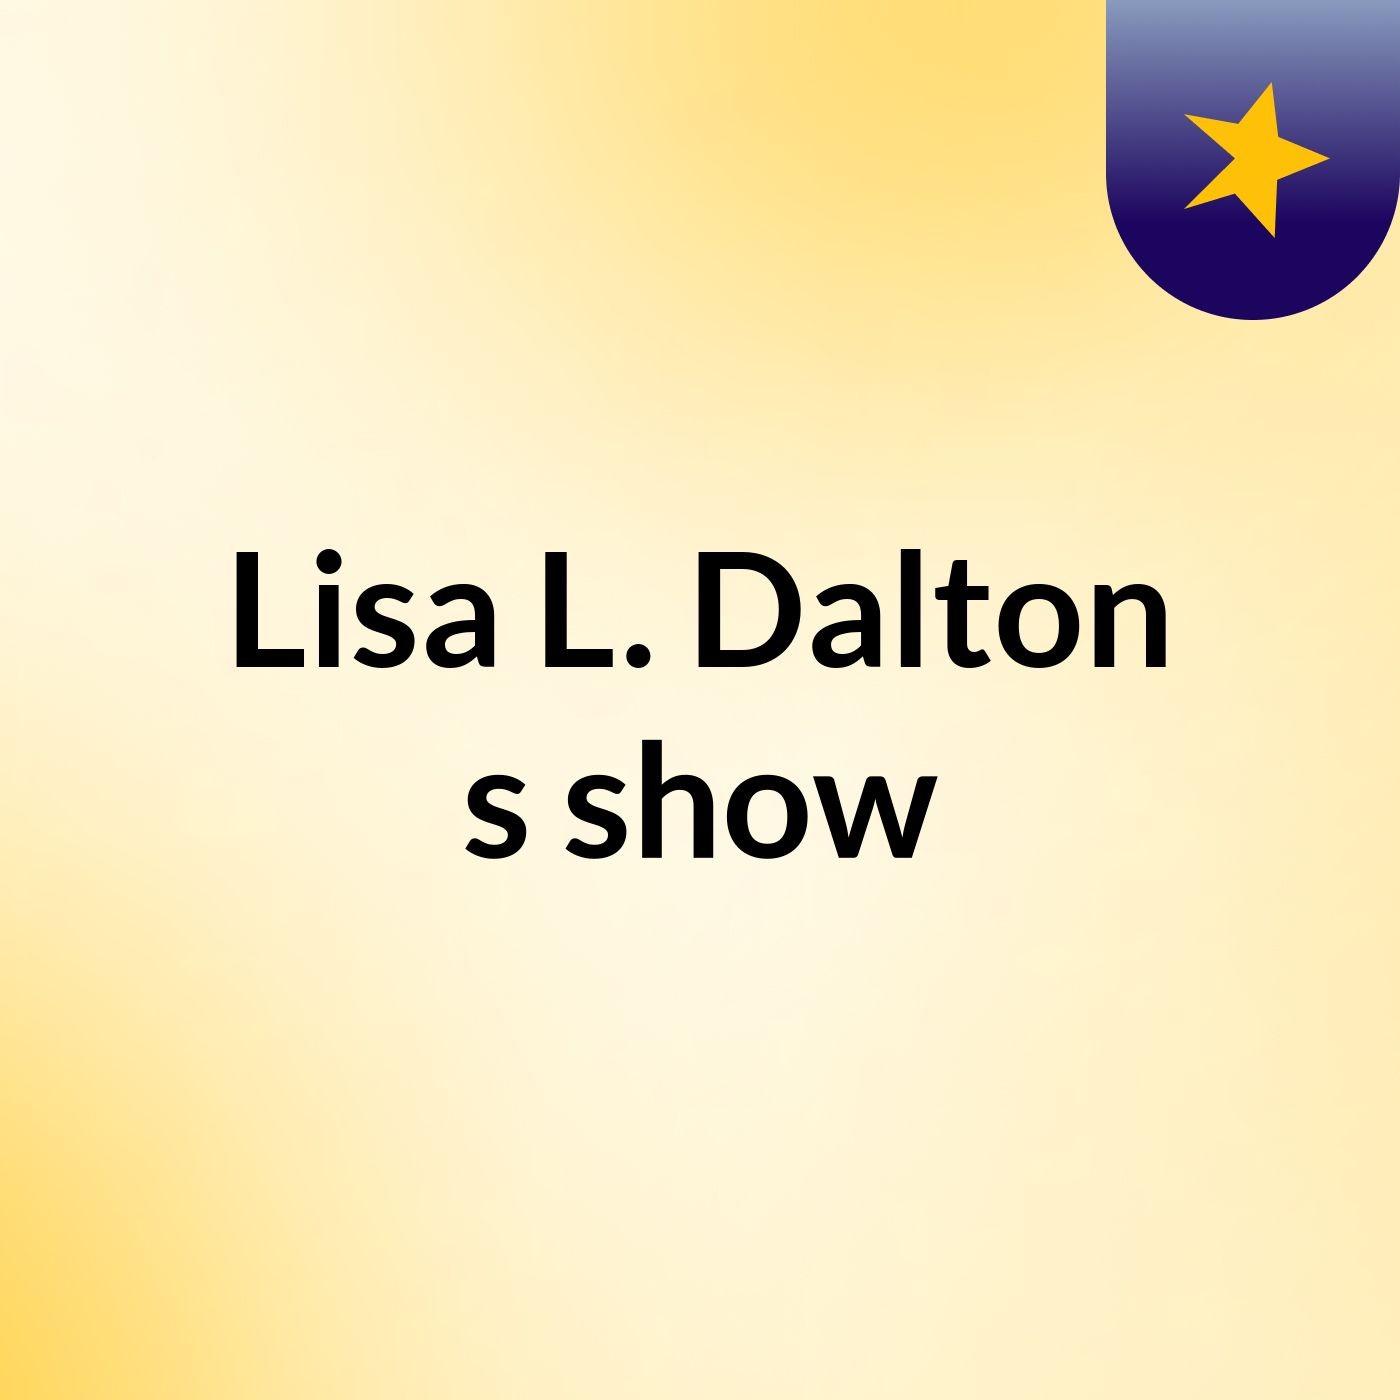 Lisa L. Dalton's show